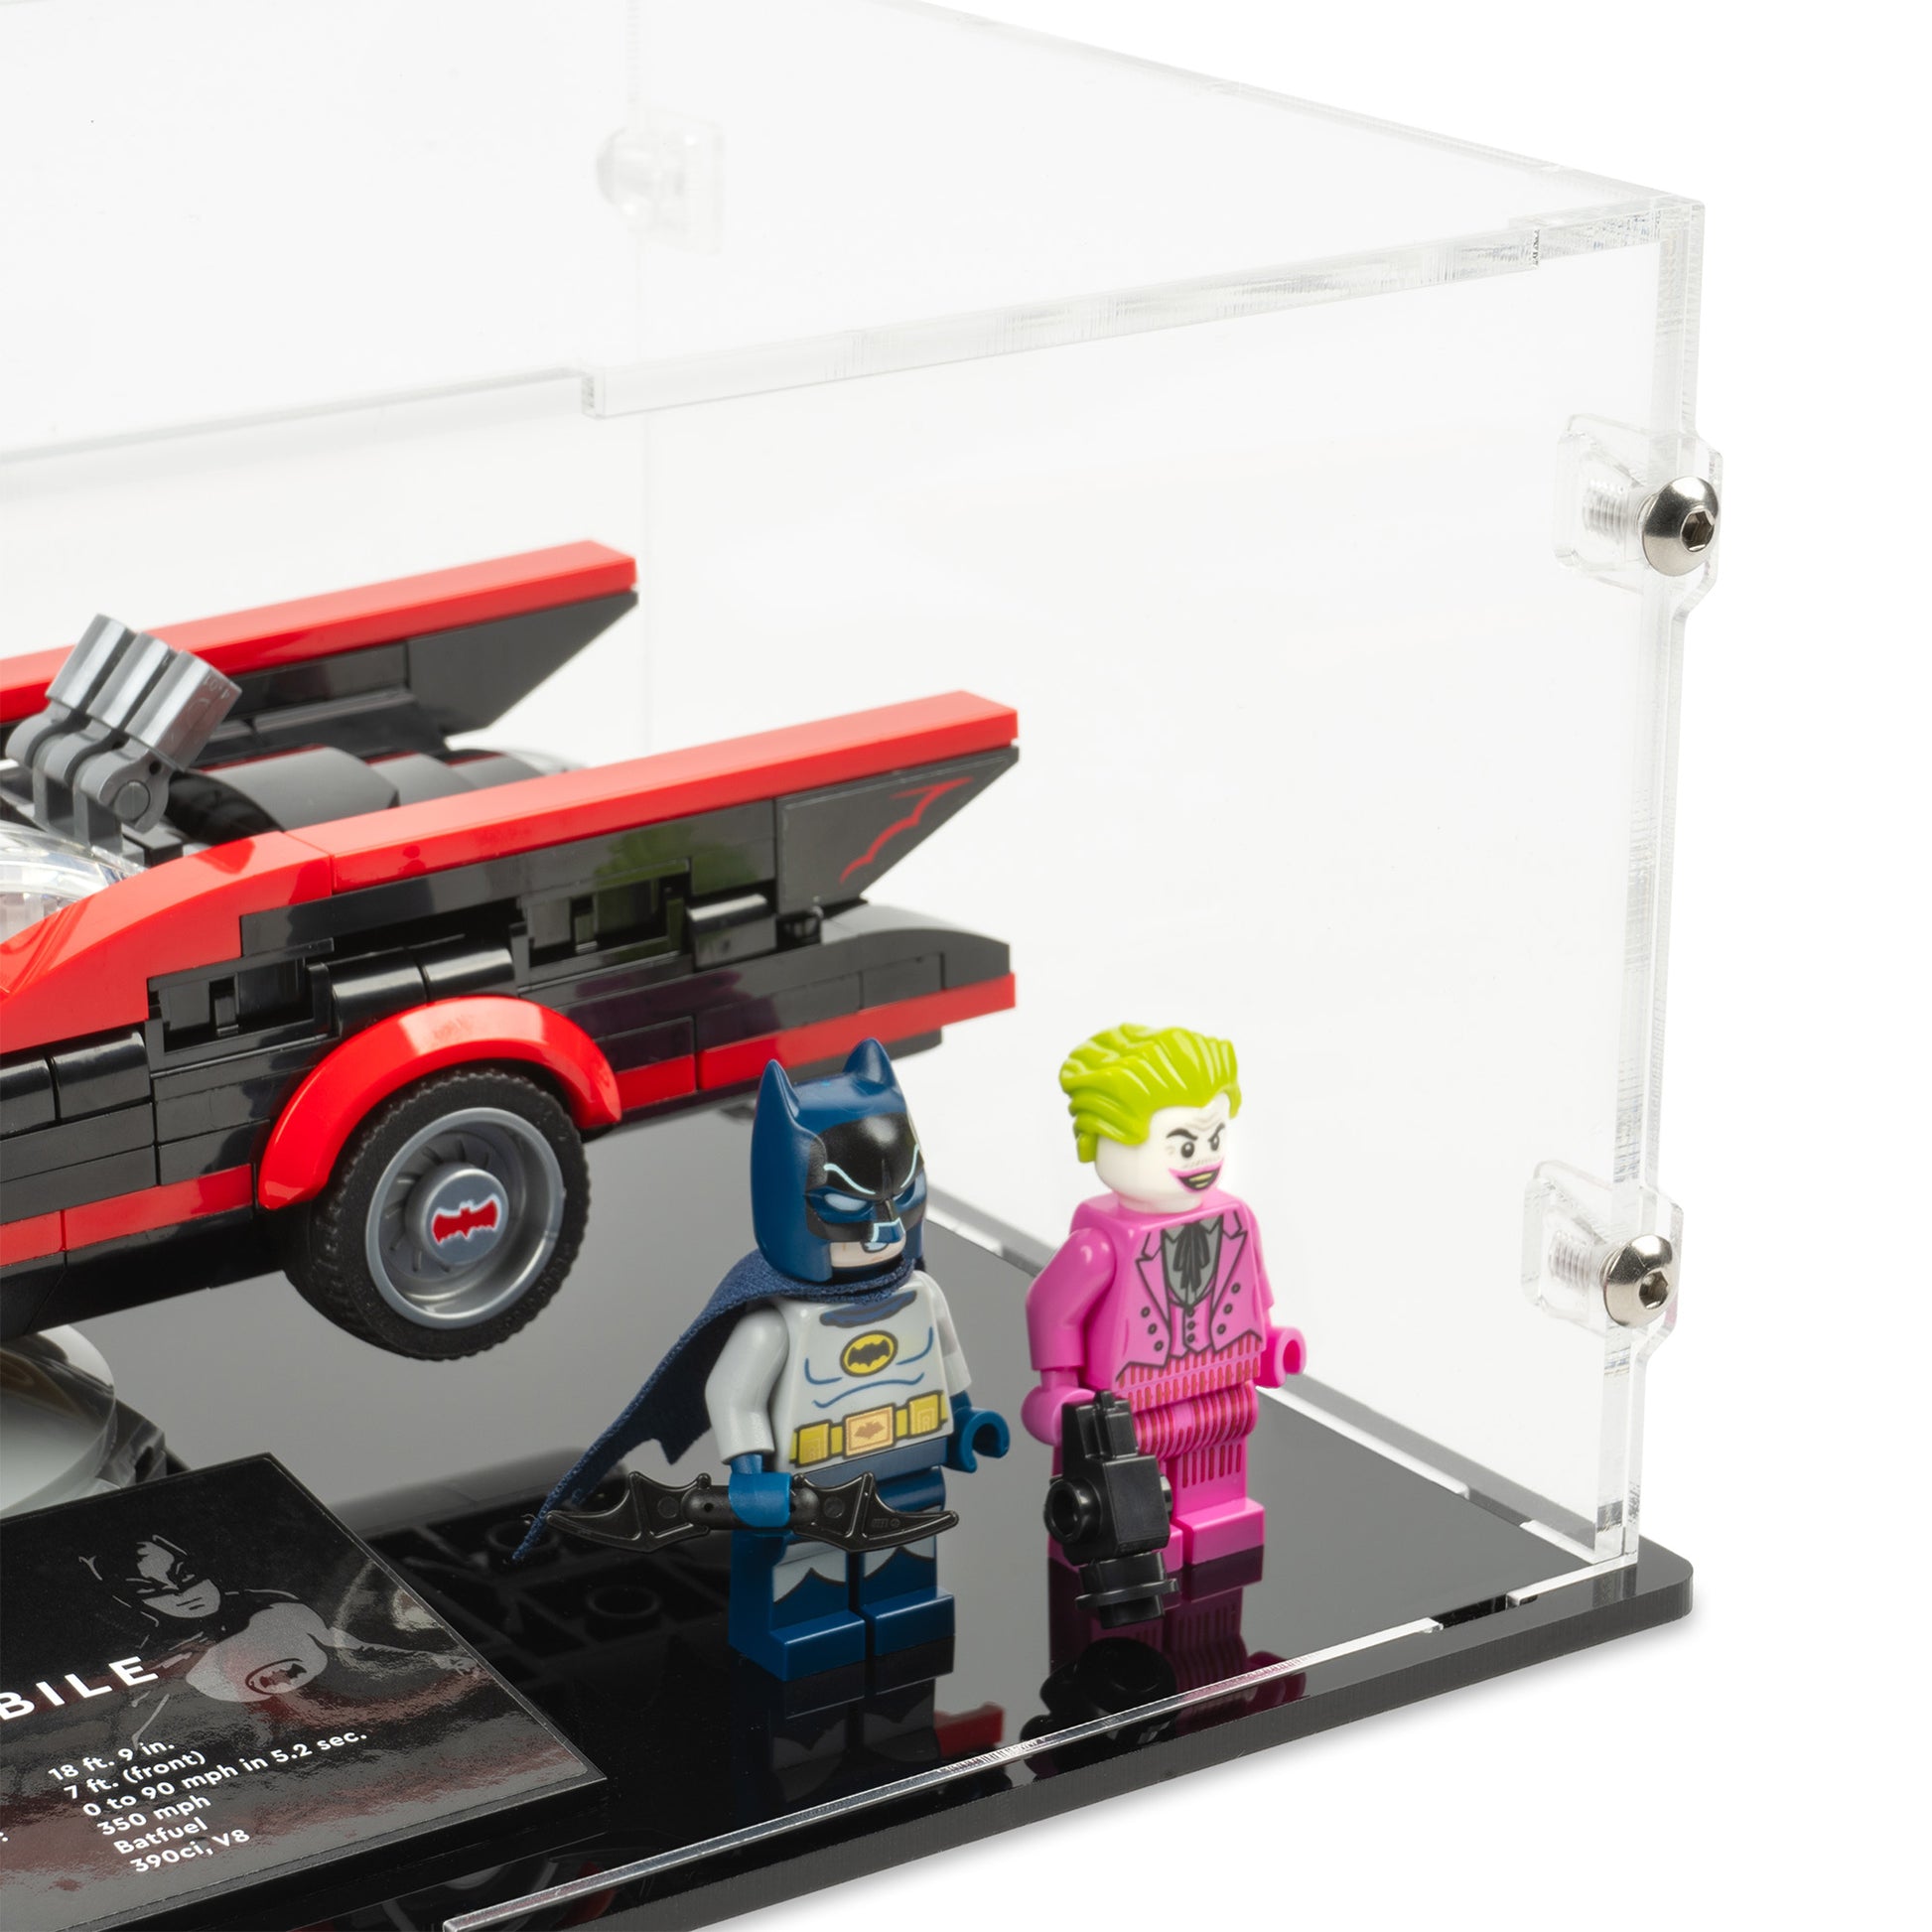 LEGO 76188 Batman Classic TV Series Batmobile